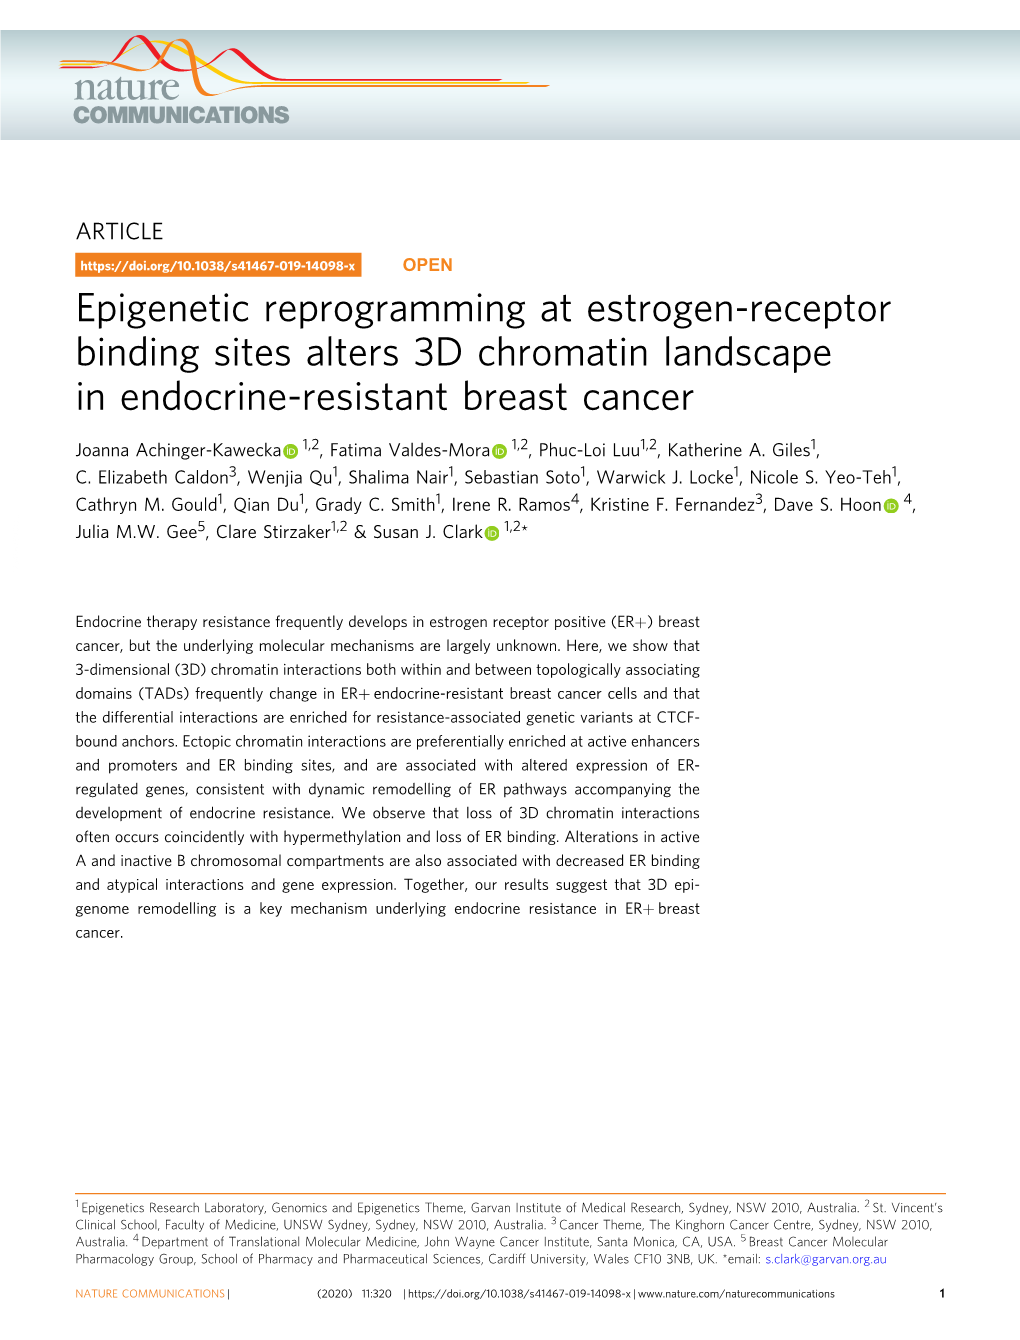 Epigenetic Reprogramming at Estrogen-Receptor Binding Sites Alters 3D Chromatin Landscape in Endocrine-Resistant Breast Cancer